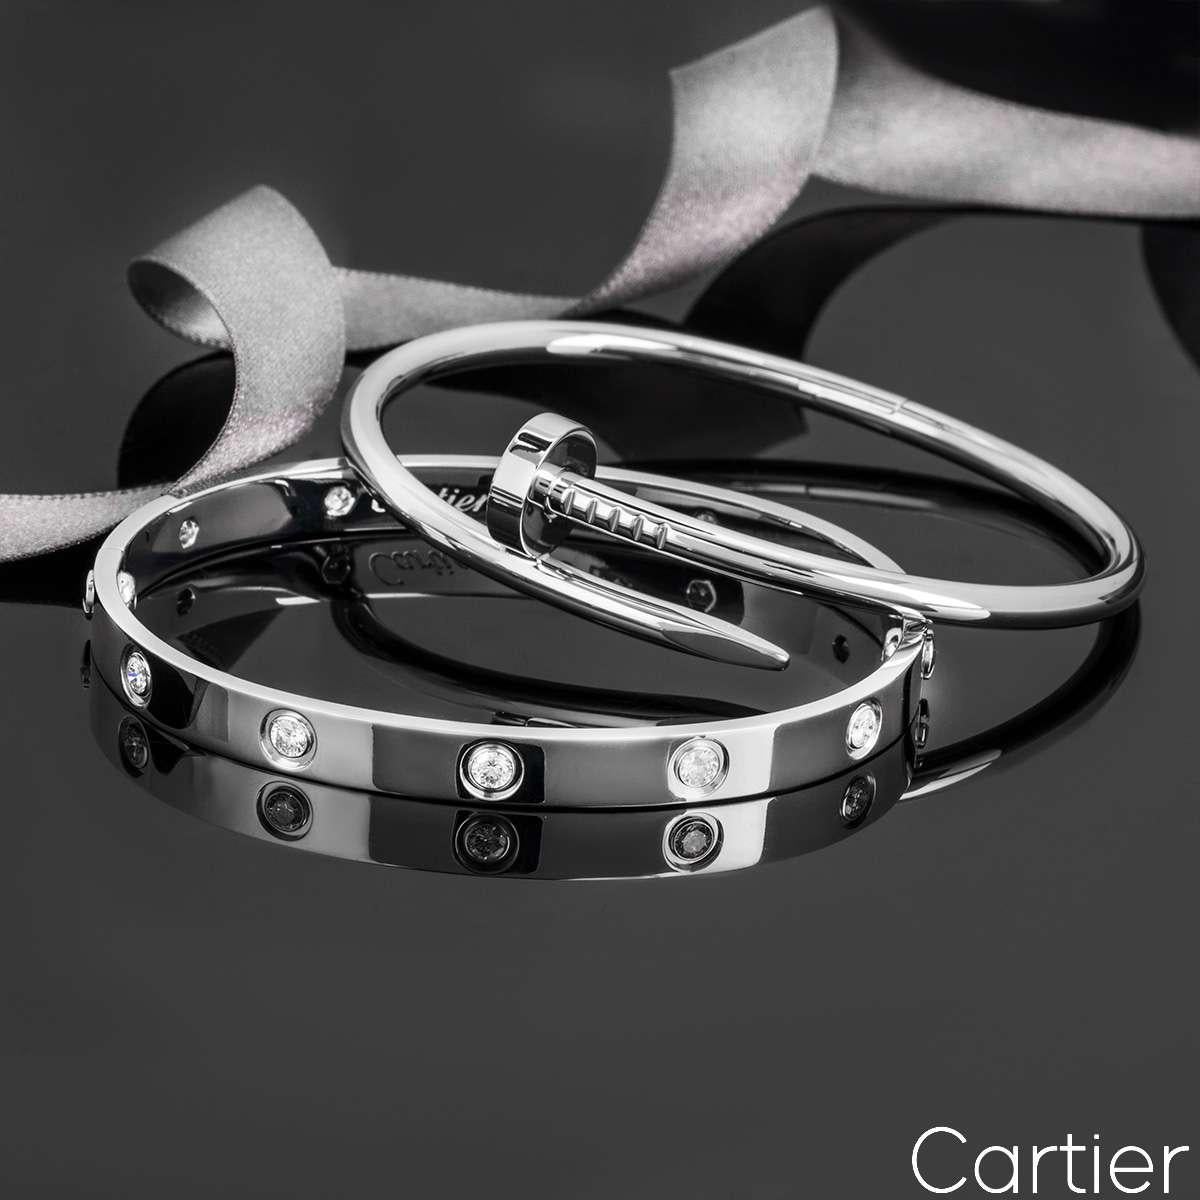 Round Cut Cartier White Gold Full Diamond Love Bracelet Size 18 B6040718 For Sale